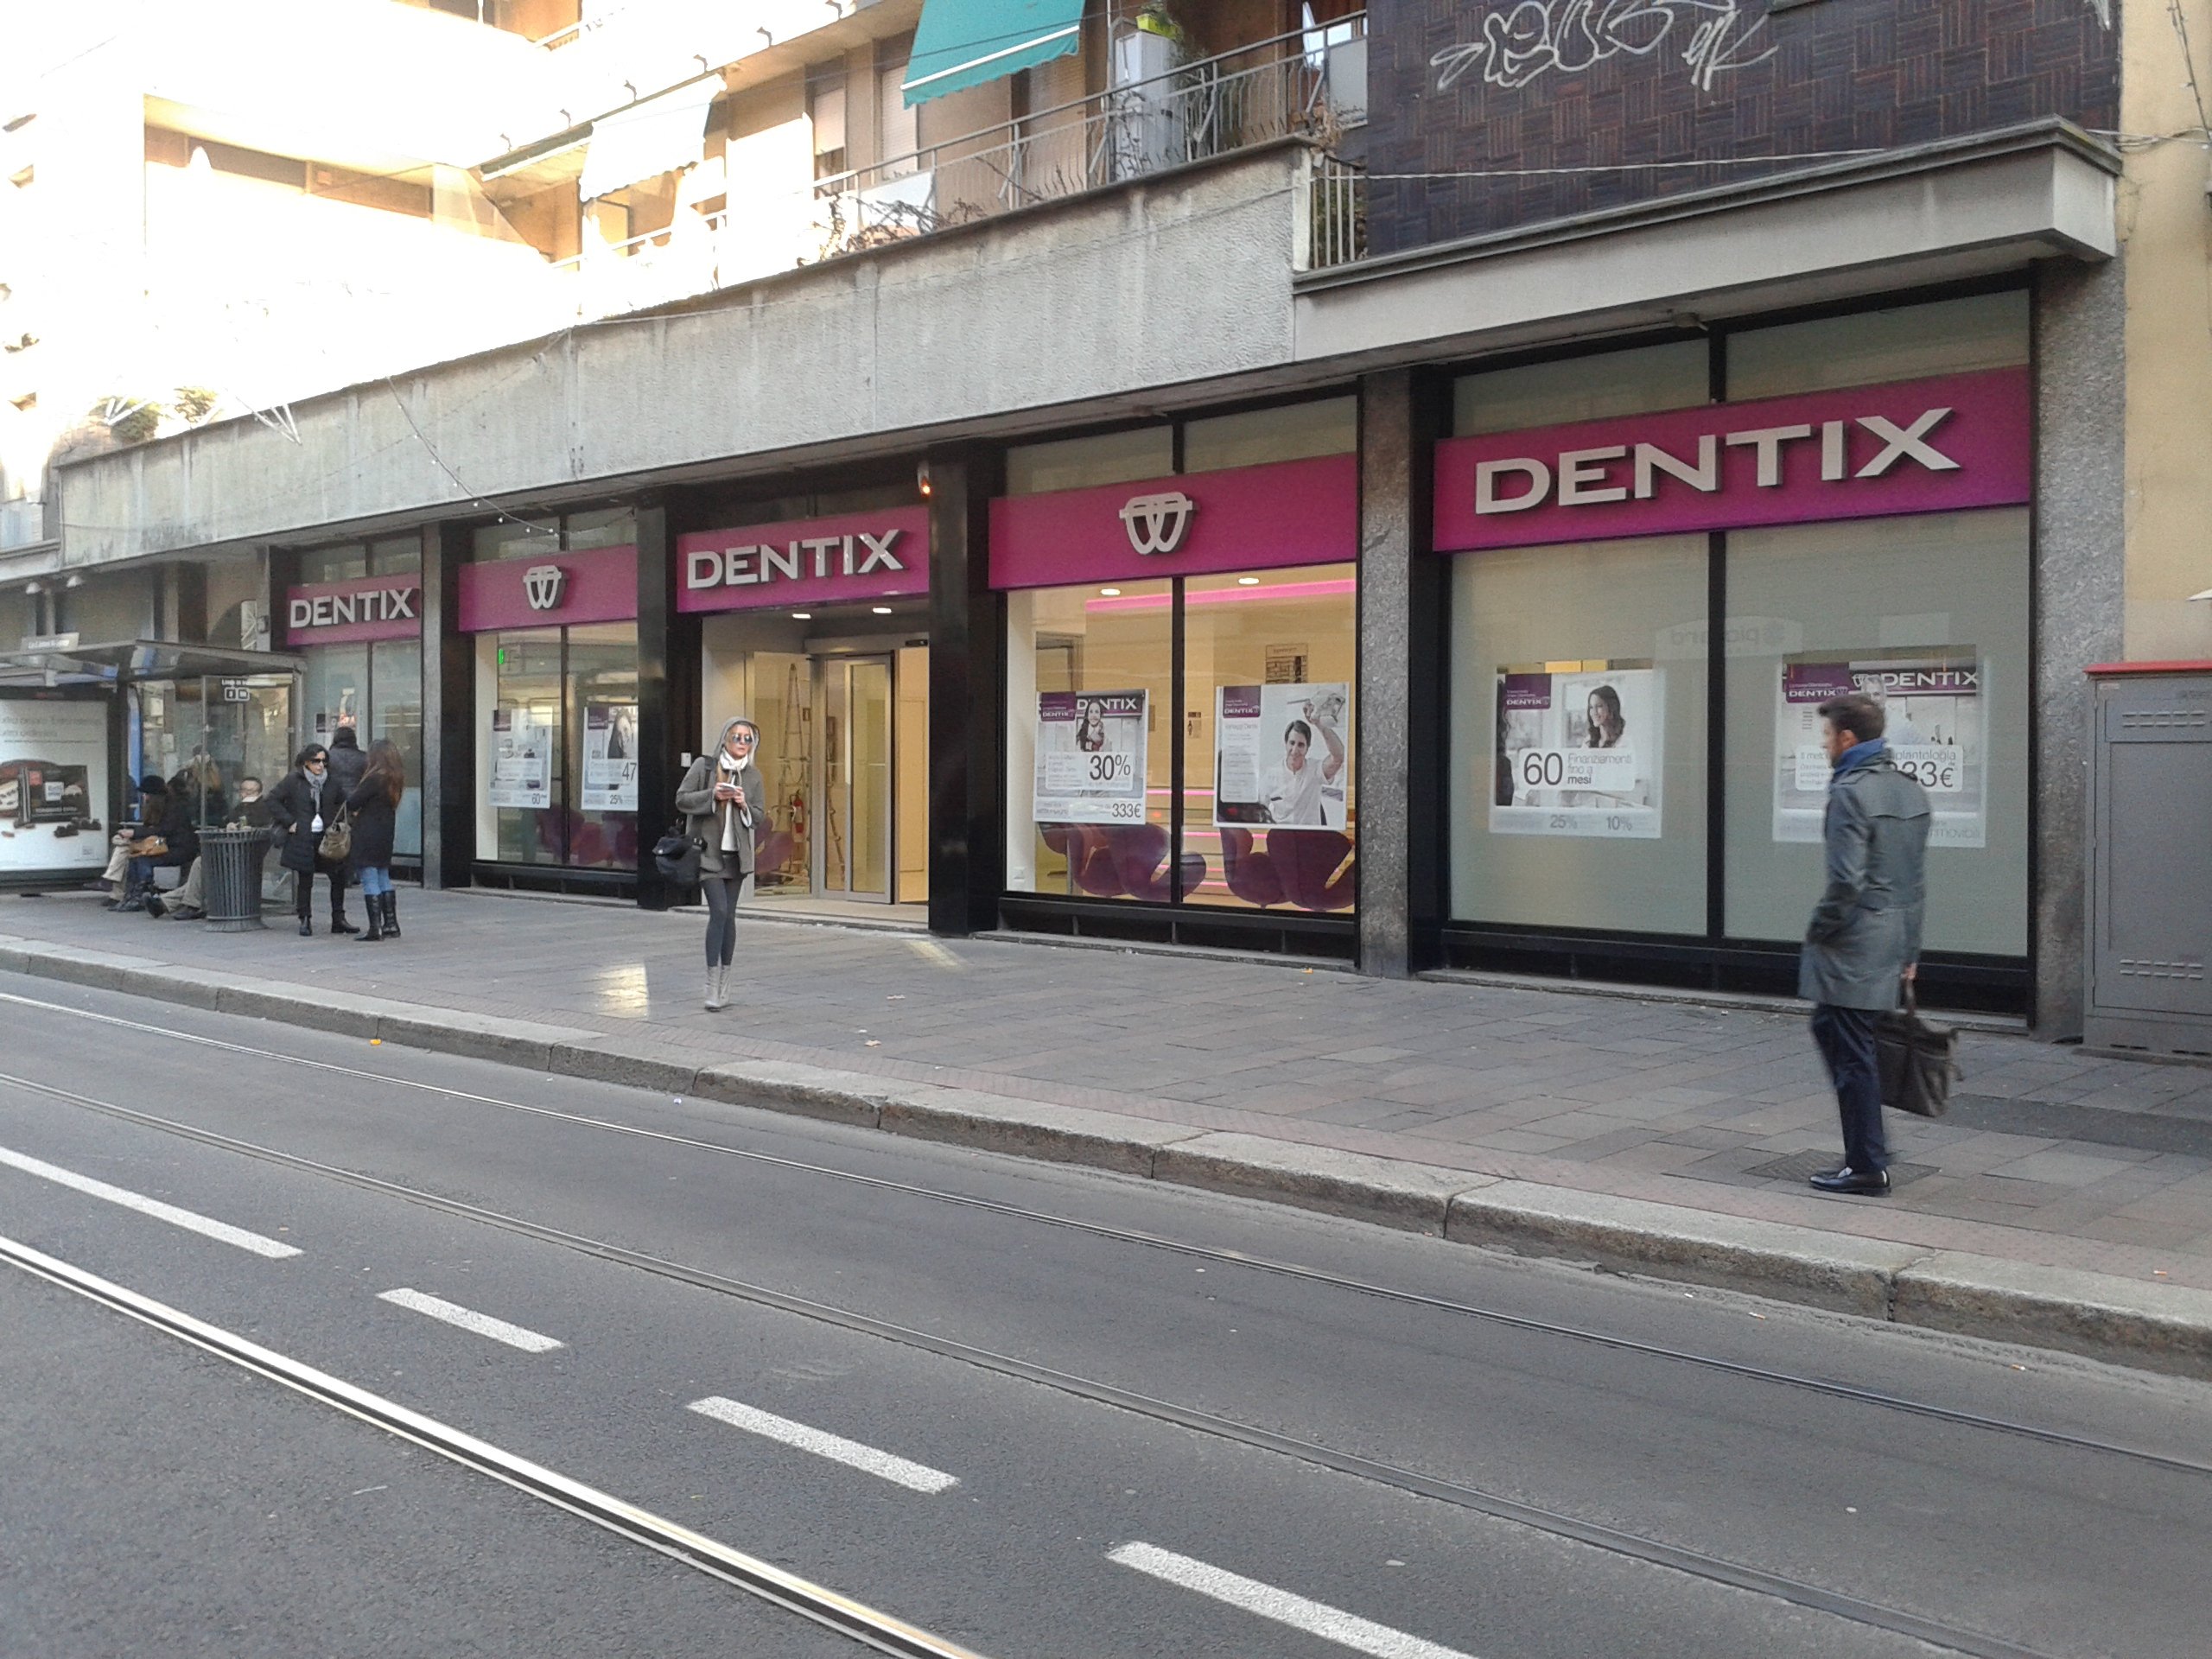 centri dentix italia (2)